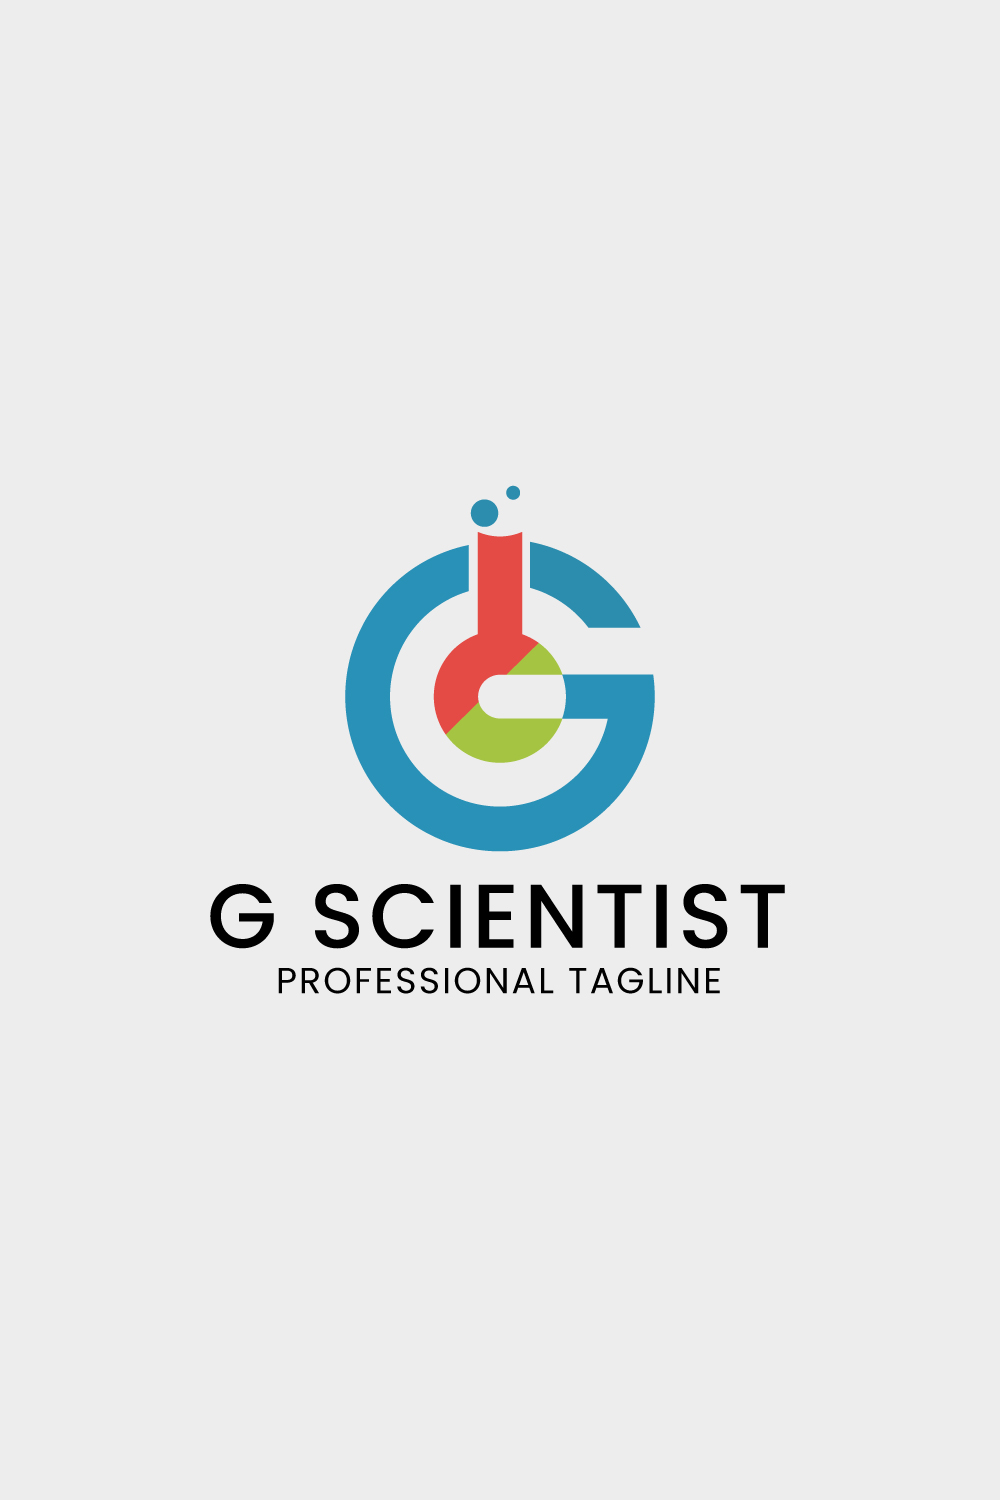 G scientist logo design pinterest preview image.